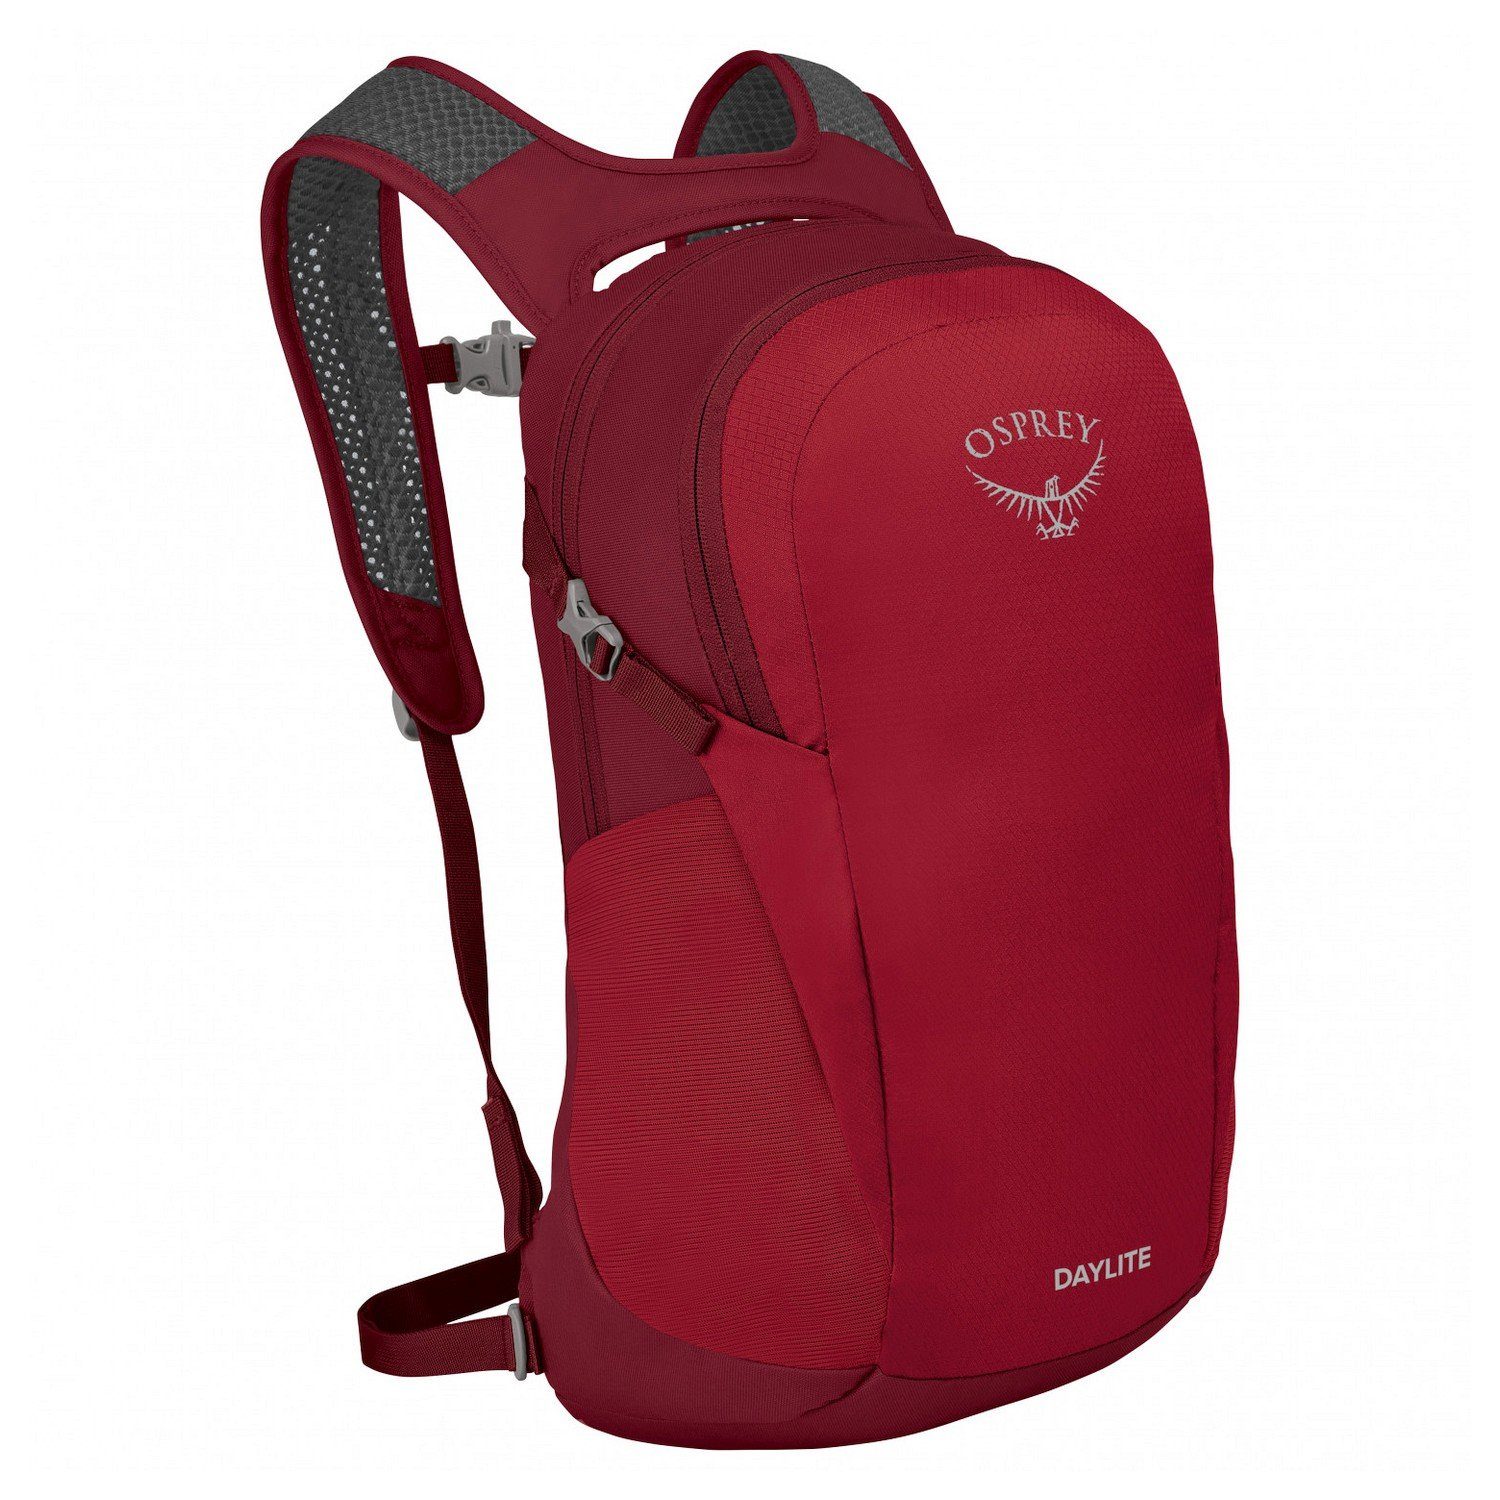 Osprey Wanderrucksack Daylite Daypack - Rucksack 48 cm cosmic red | Wanderrucksäcke